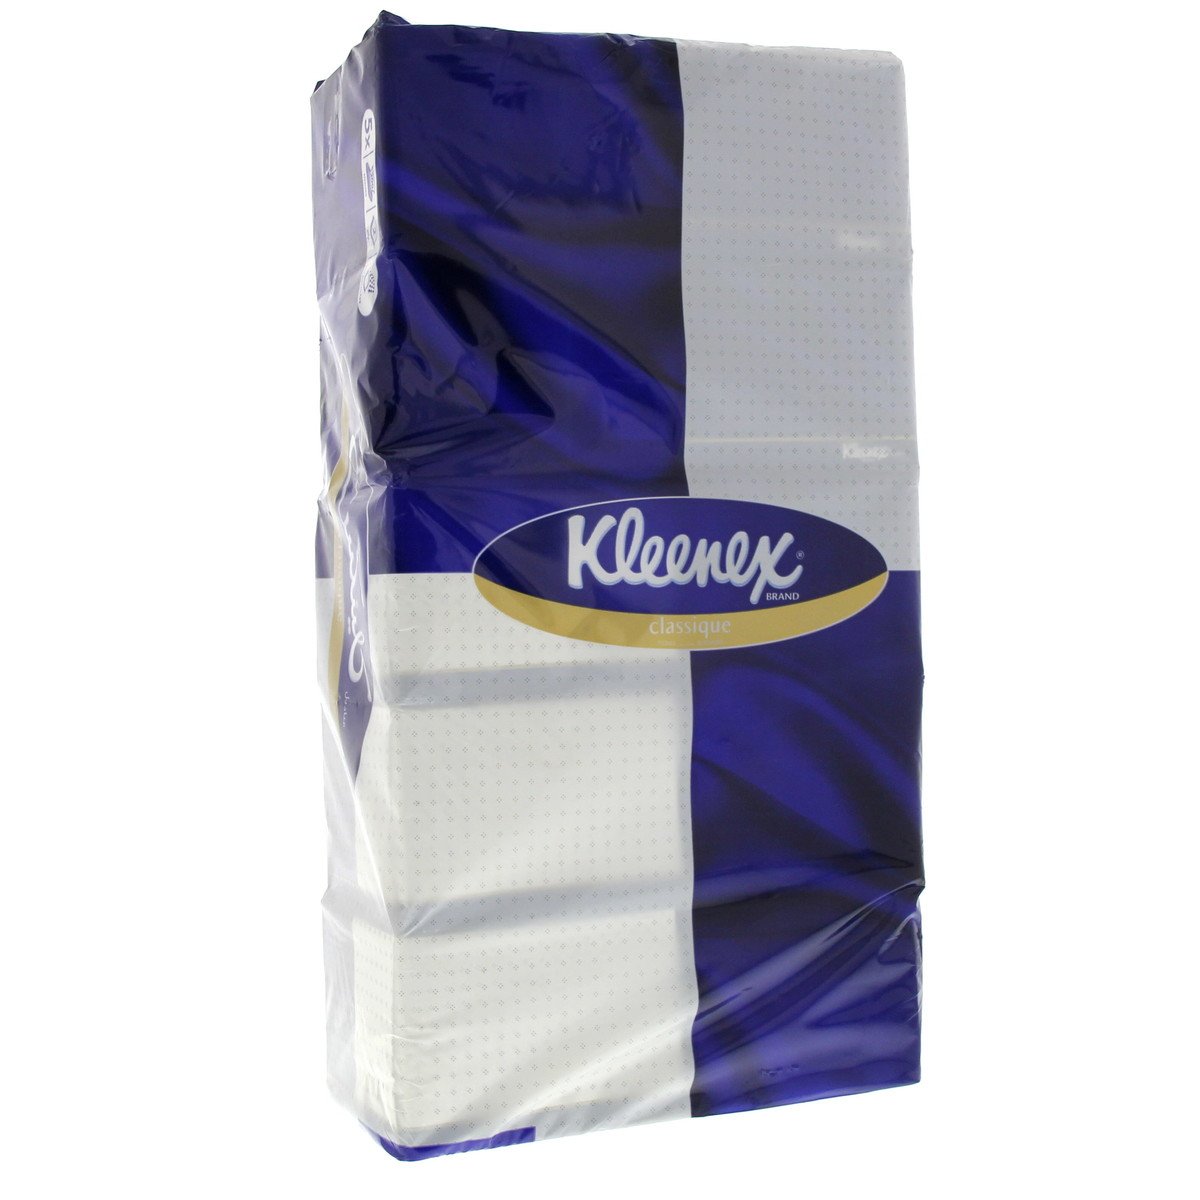 Kleenex Classique Facial Tissue 2ply 152 Sheets